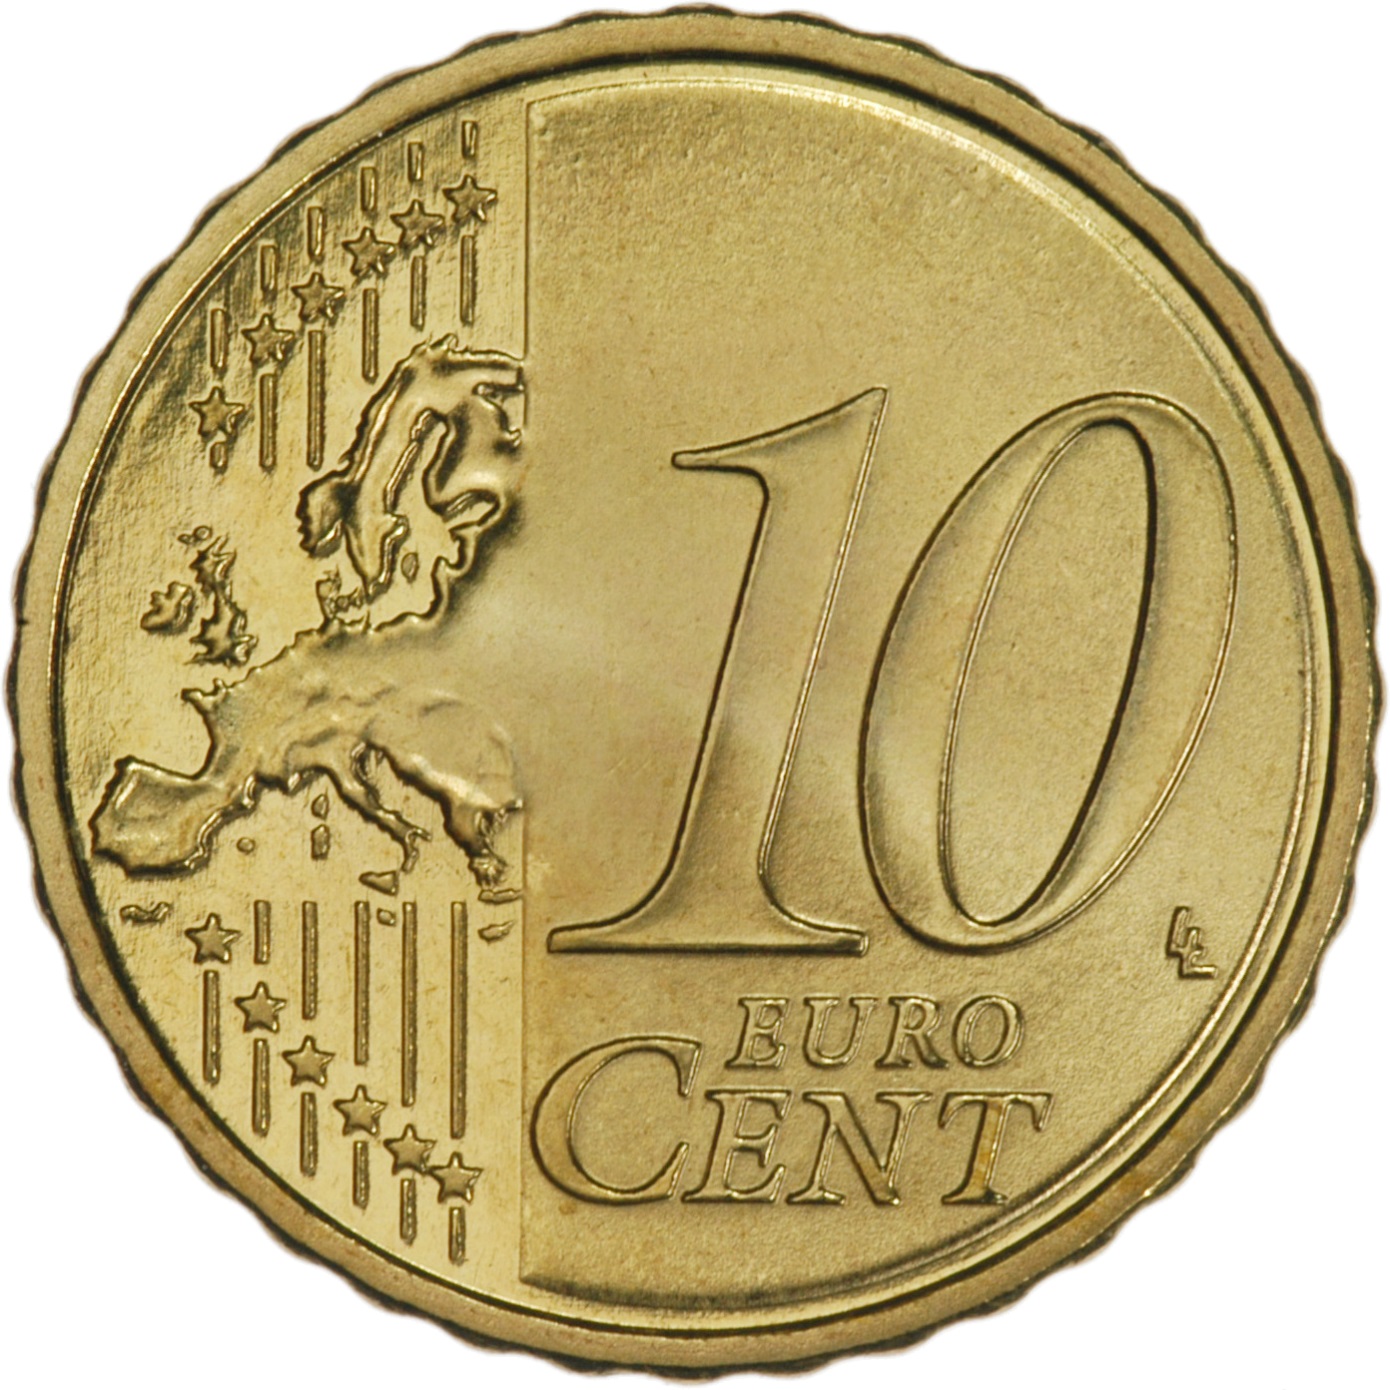 Cyprus 10 cent 2010 [eur16597]